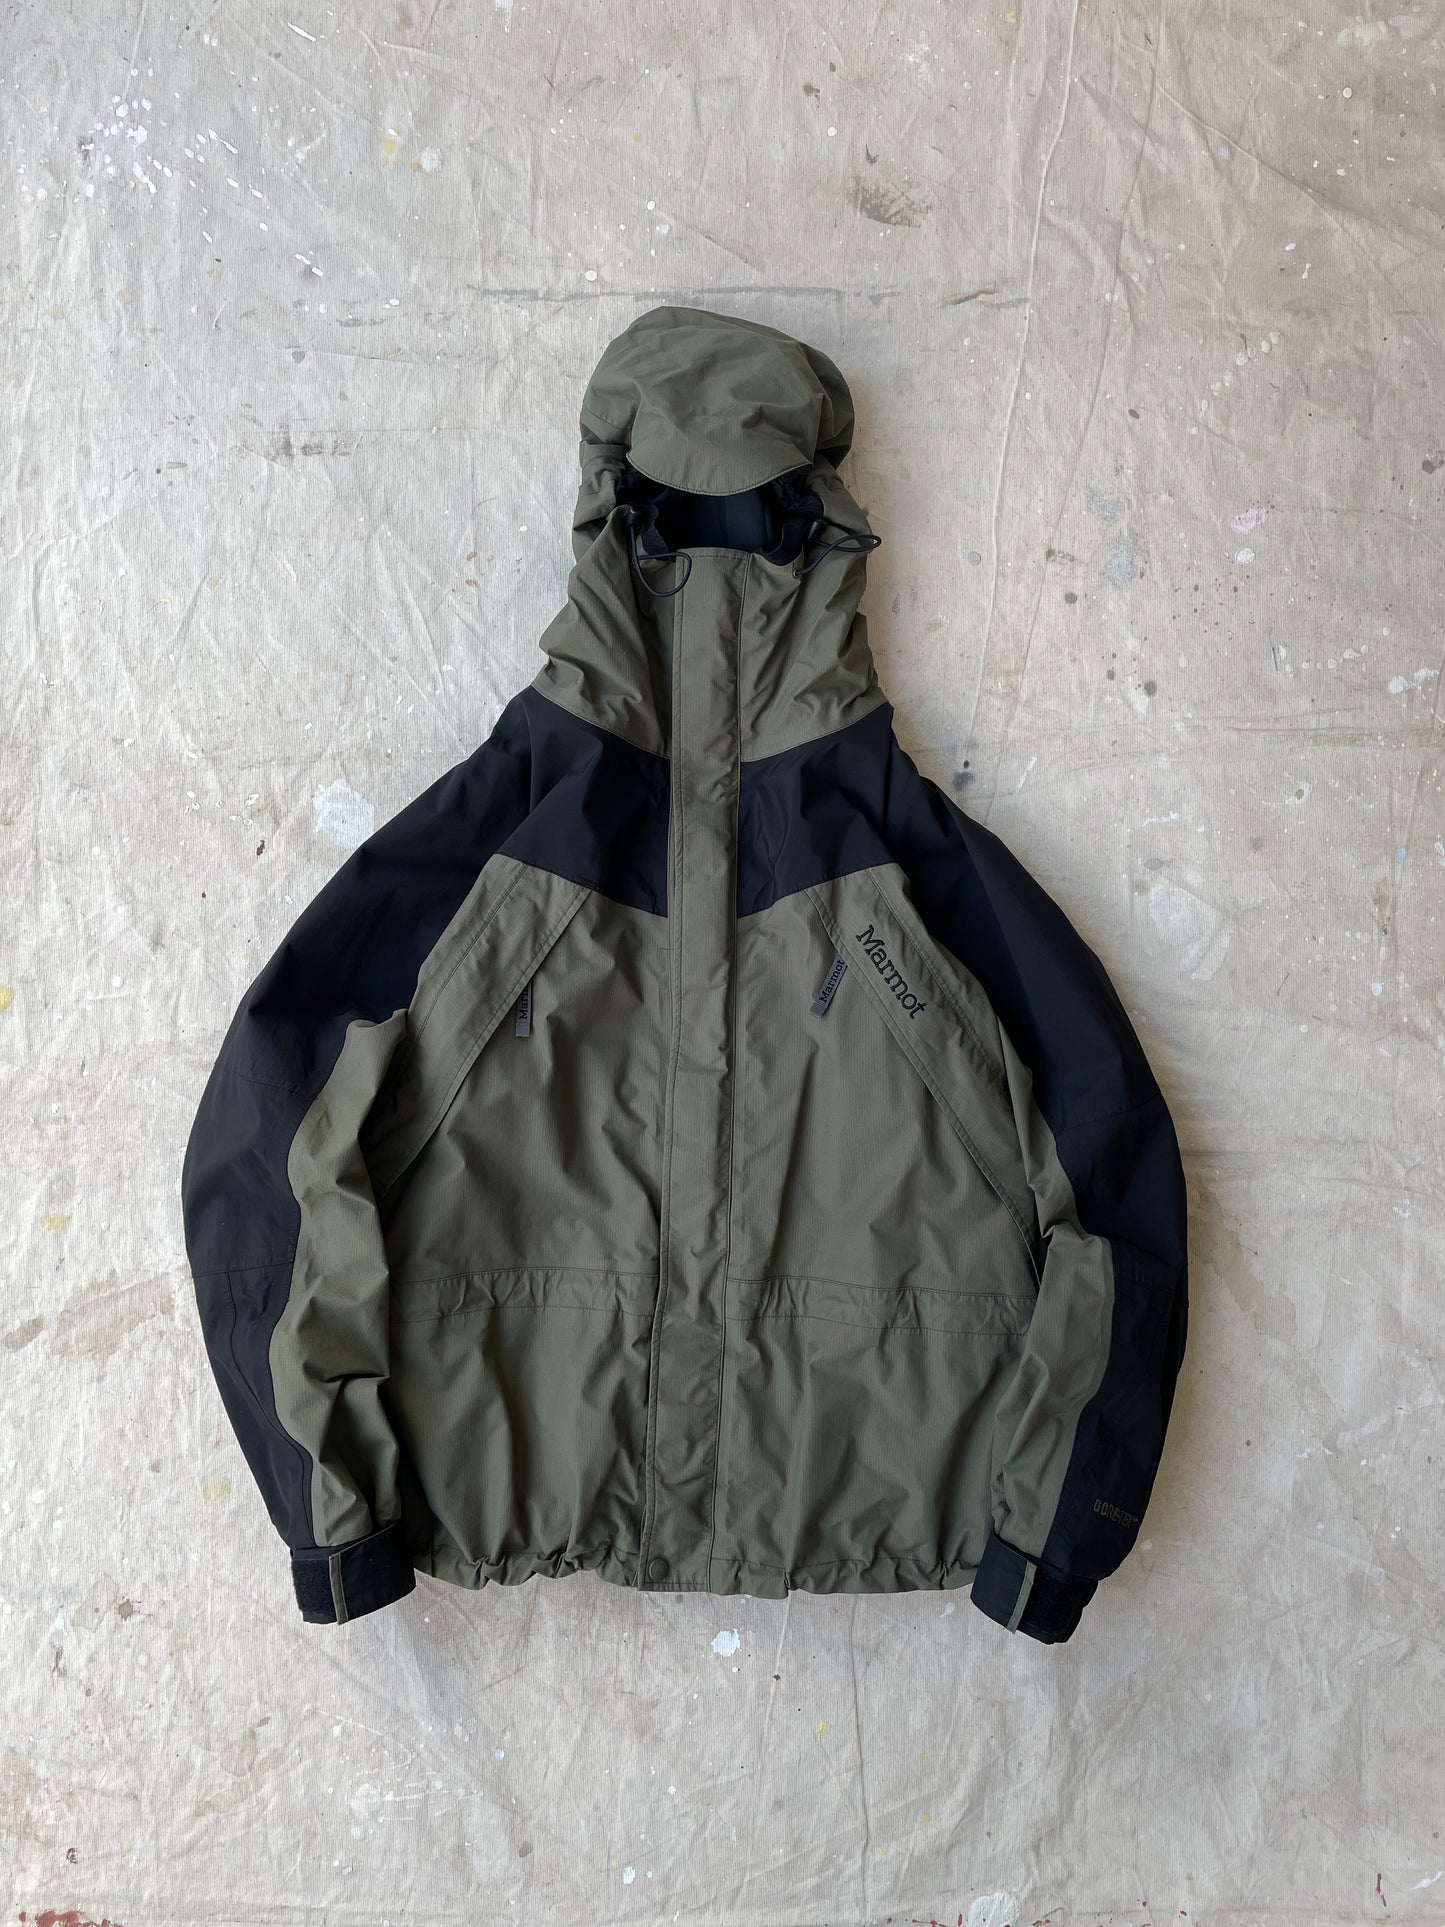 Marmot Goretex Jacket—[L]